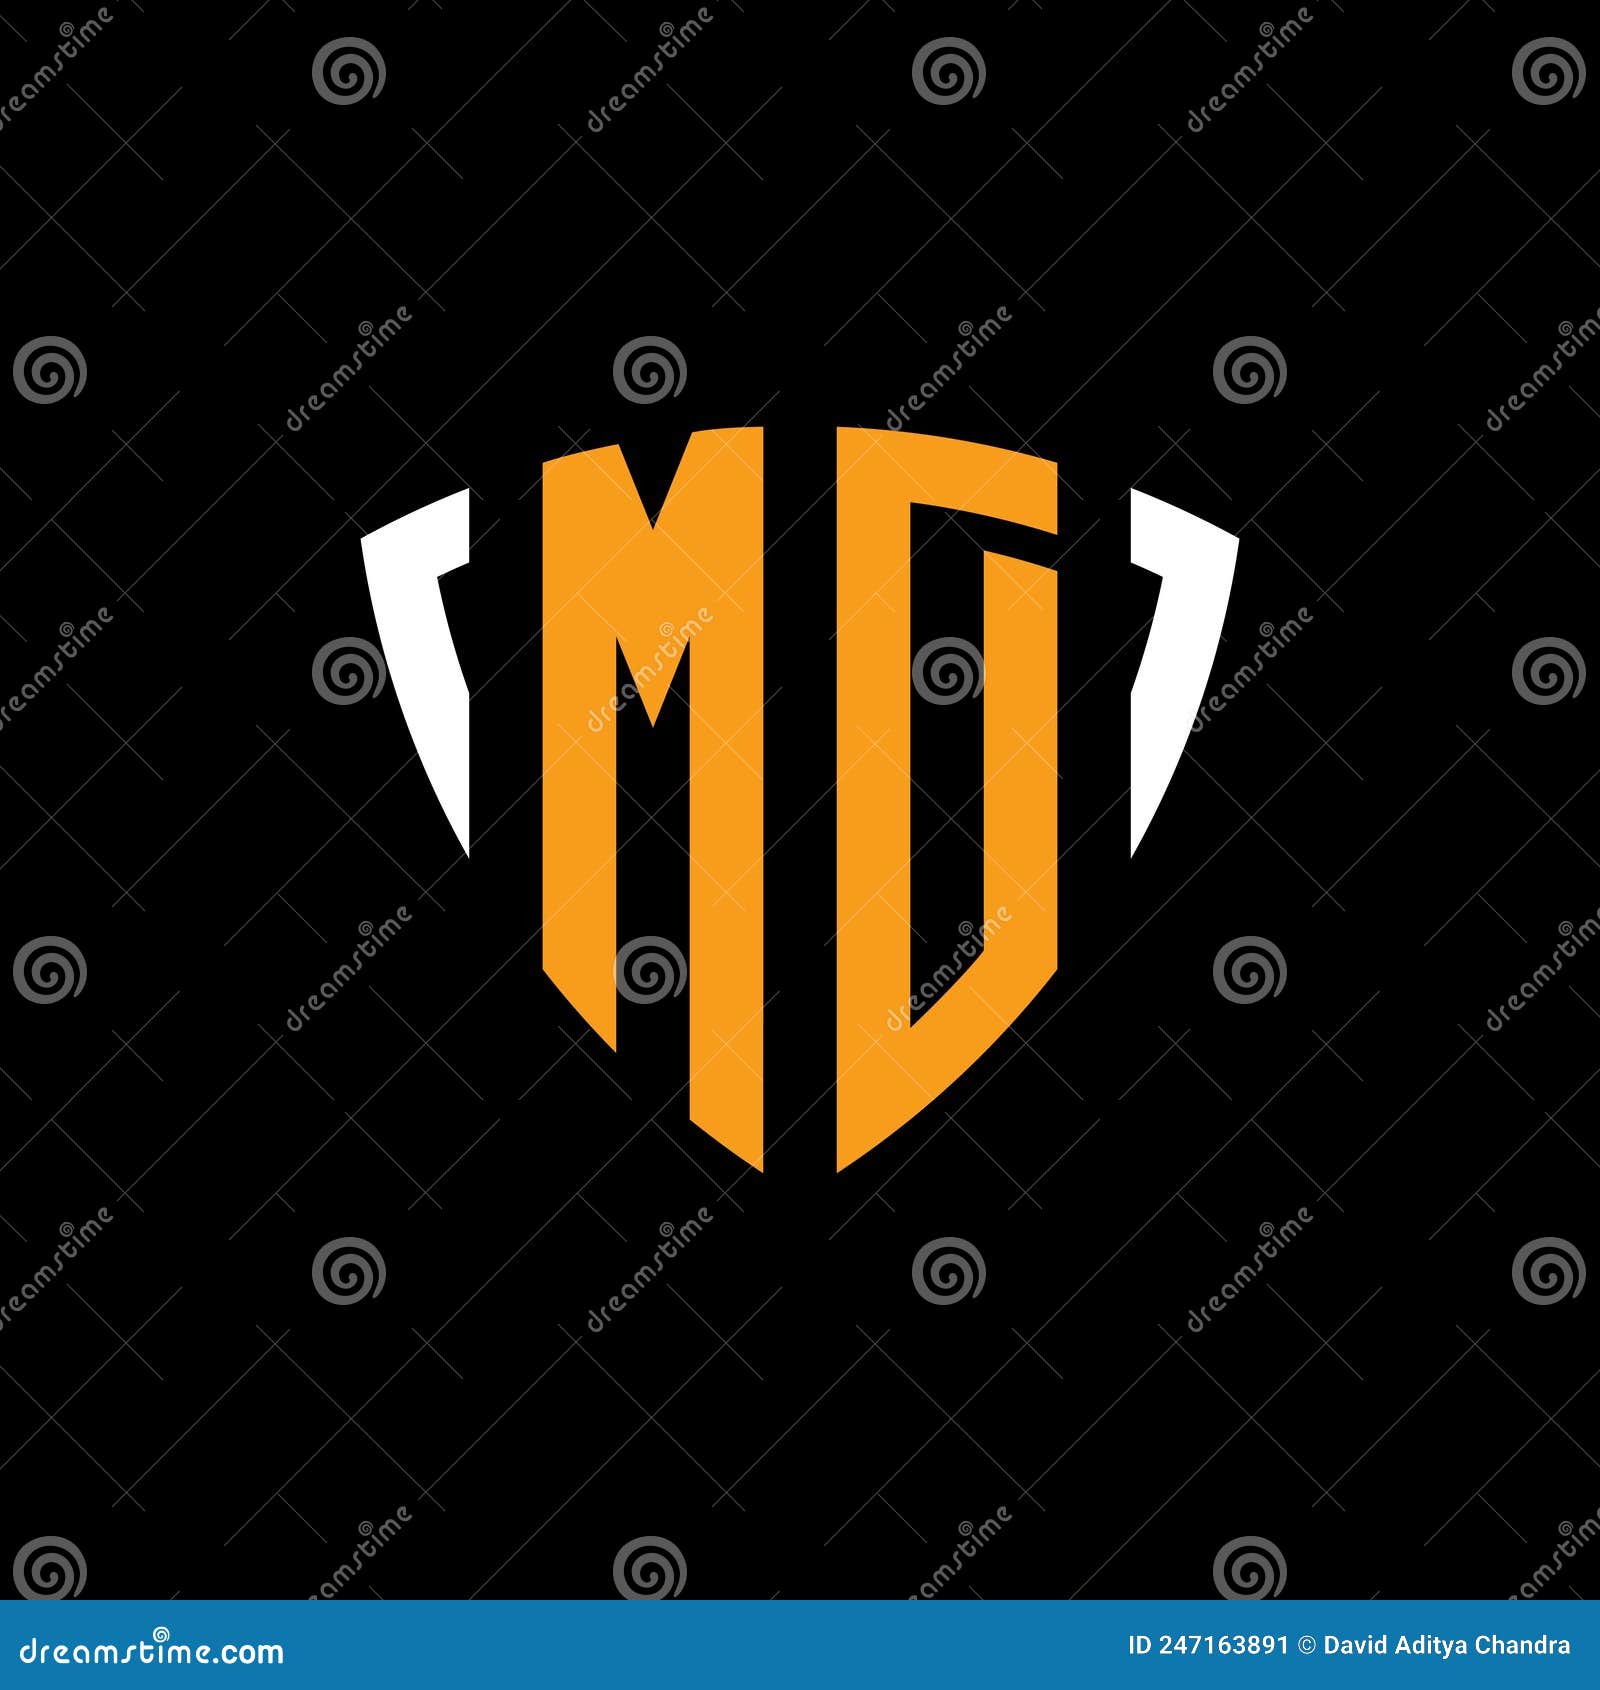 Mg logo monogram with emblem shield shape design Vector Image